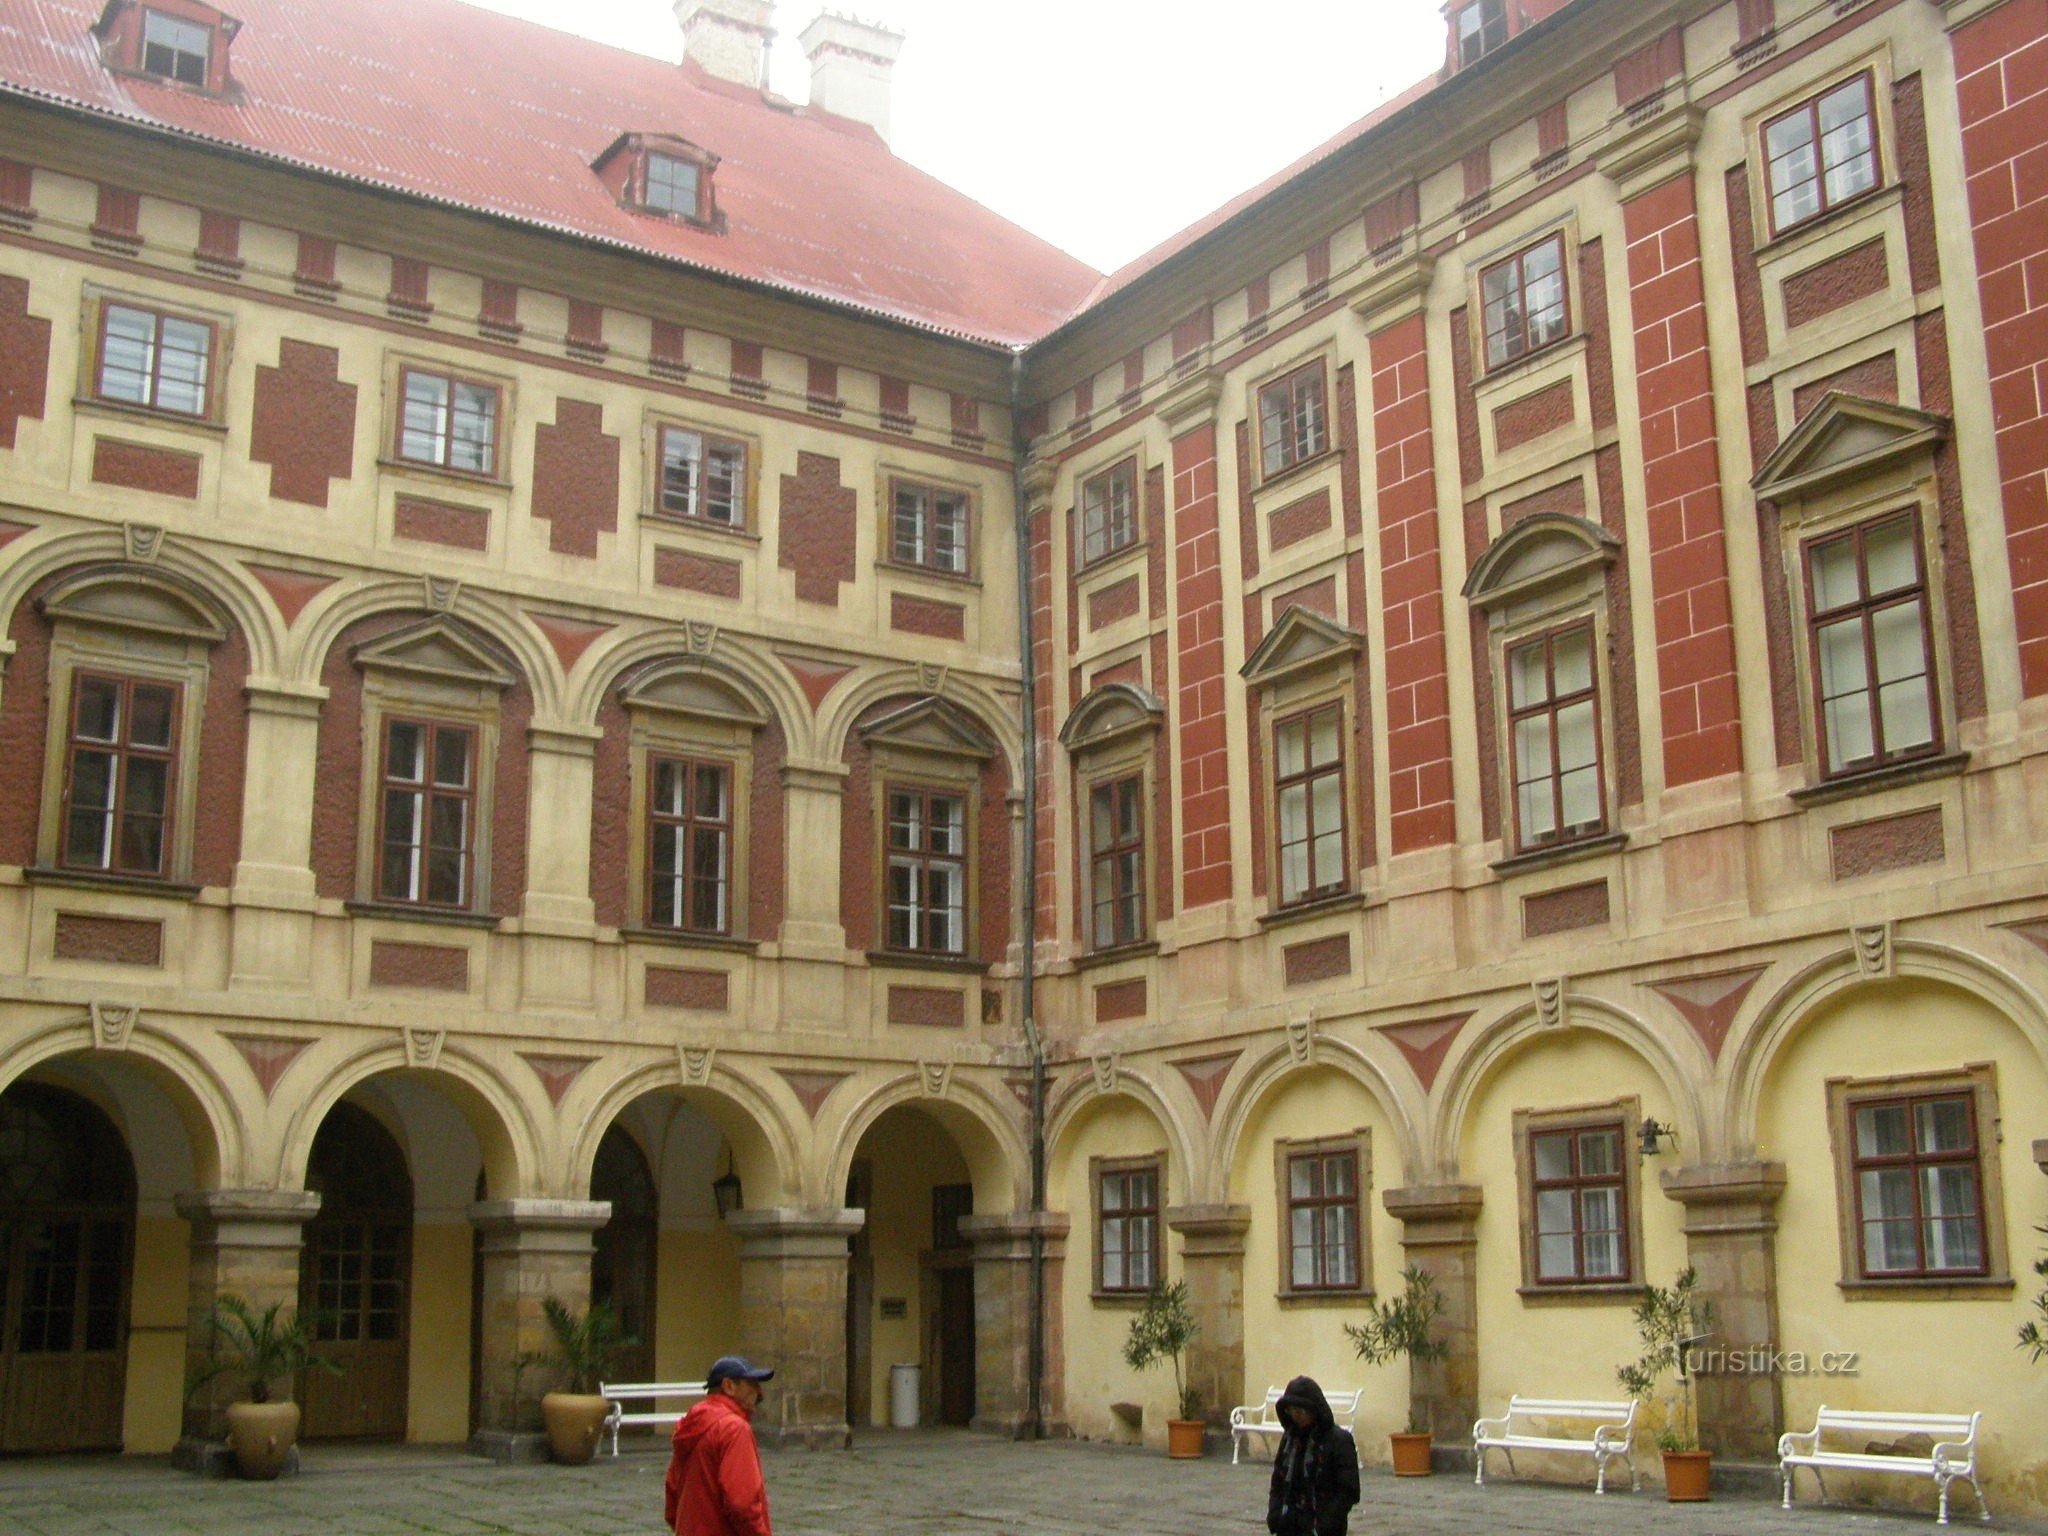 Libochovice Castle courtyard